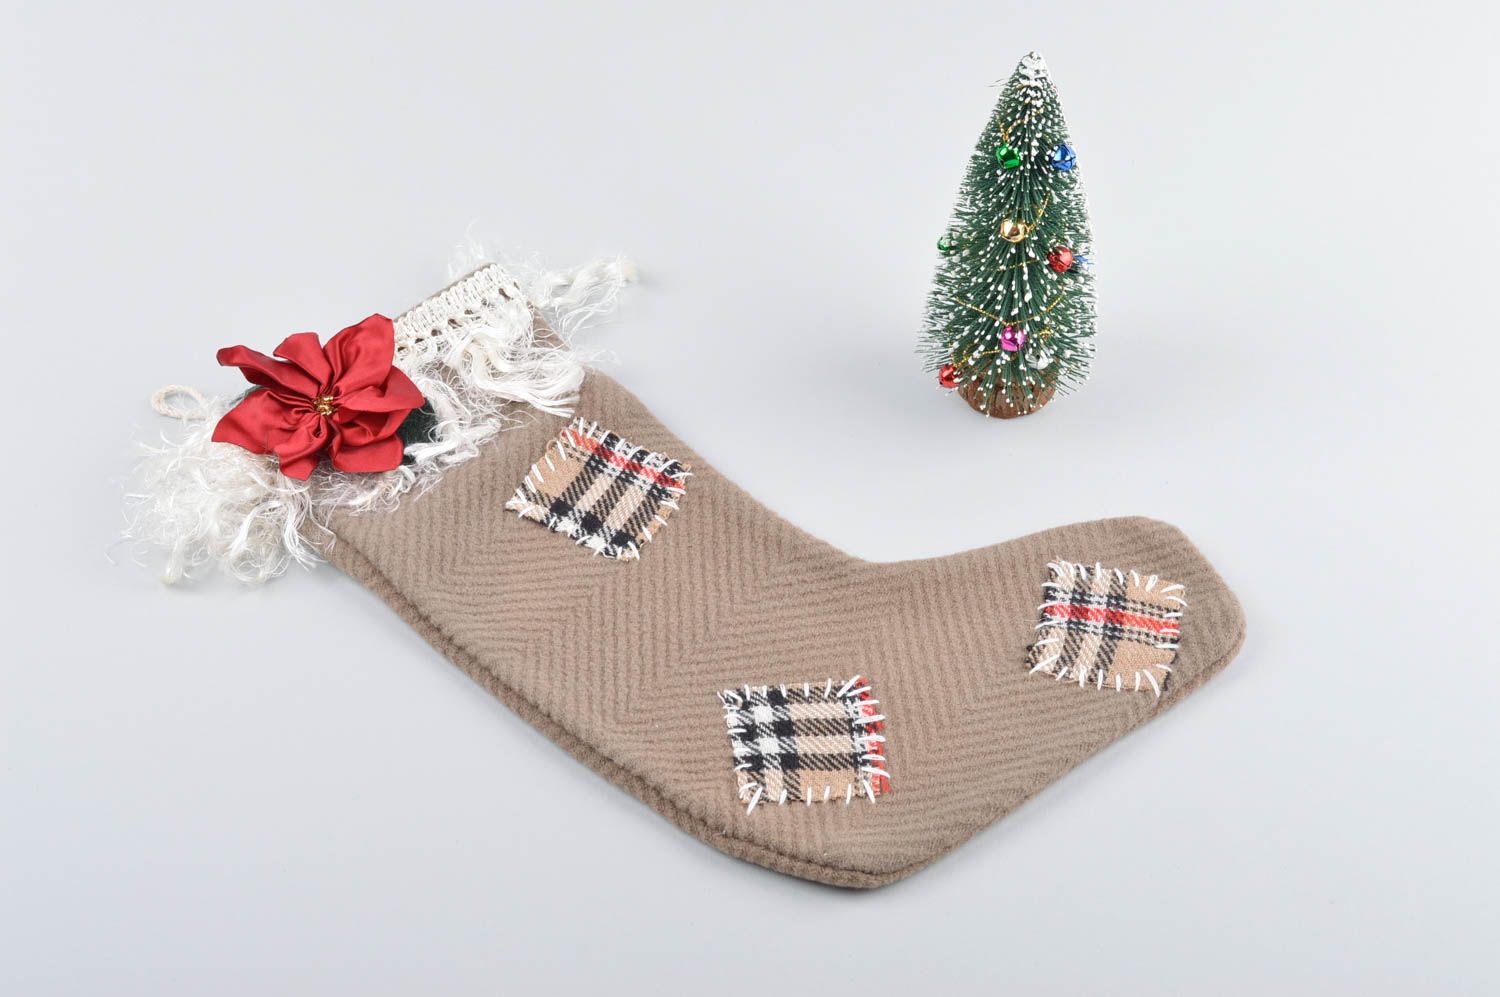 Homemade home decor Christmas stockings Xmas stockings souvenir ideas cool gifts photo 2